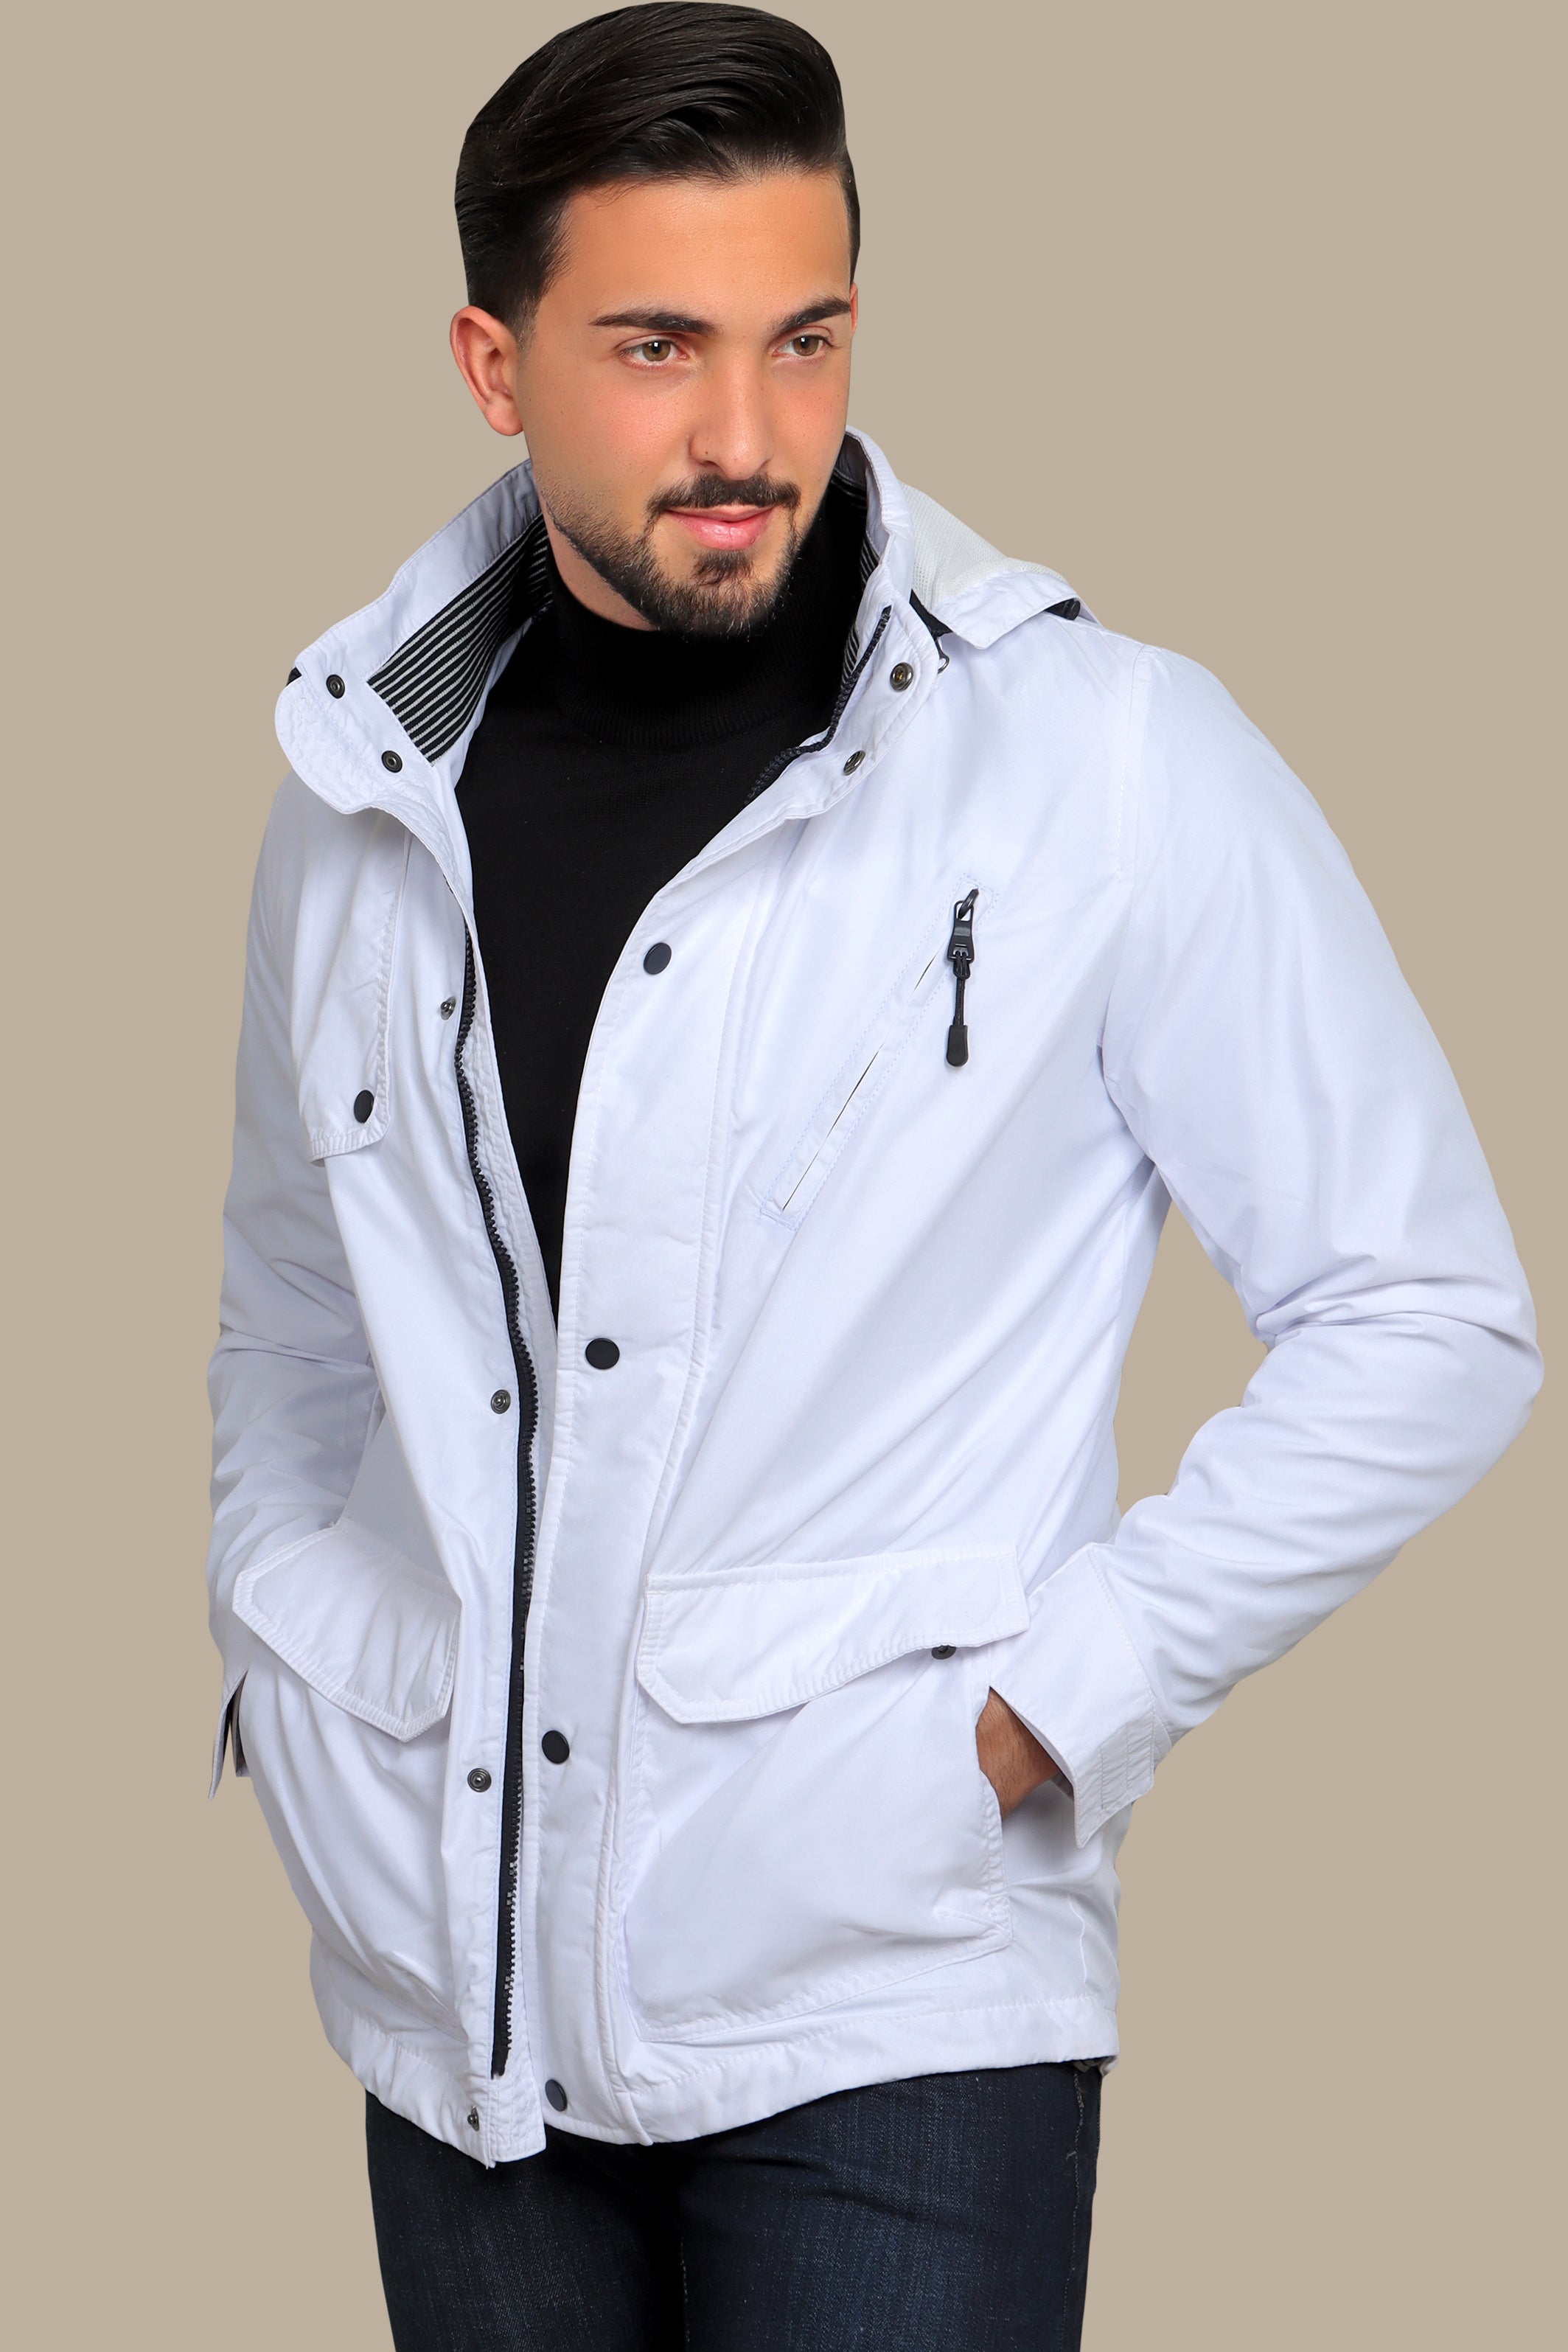 Arctic Breeze: White Windbreaker Jacket for Stylish Versatility